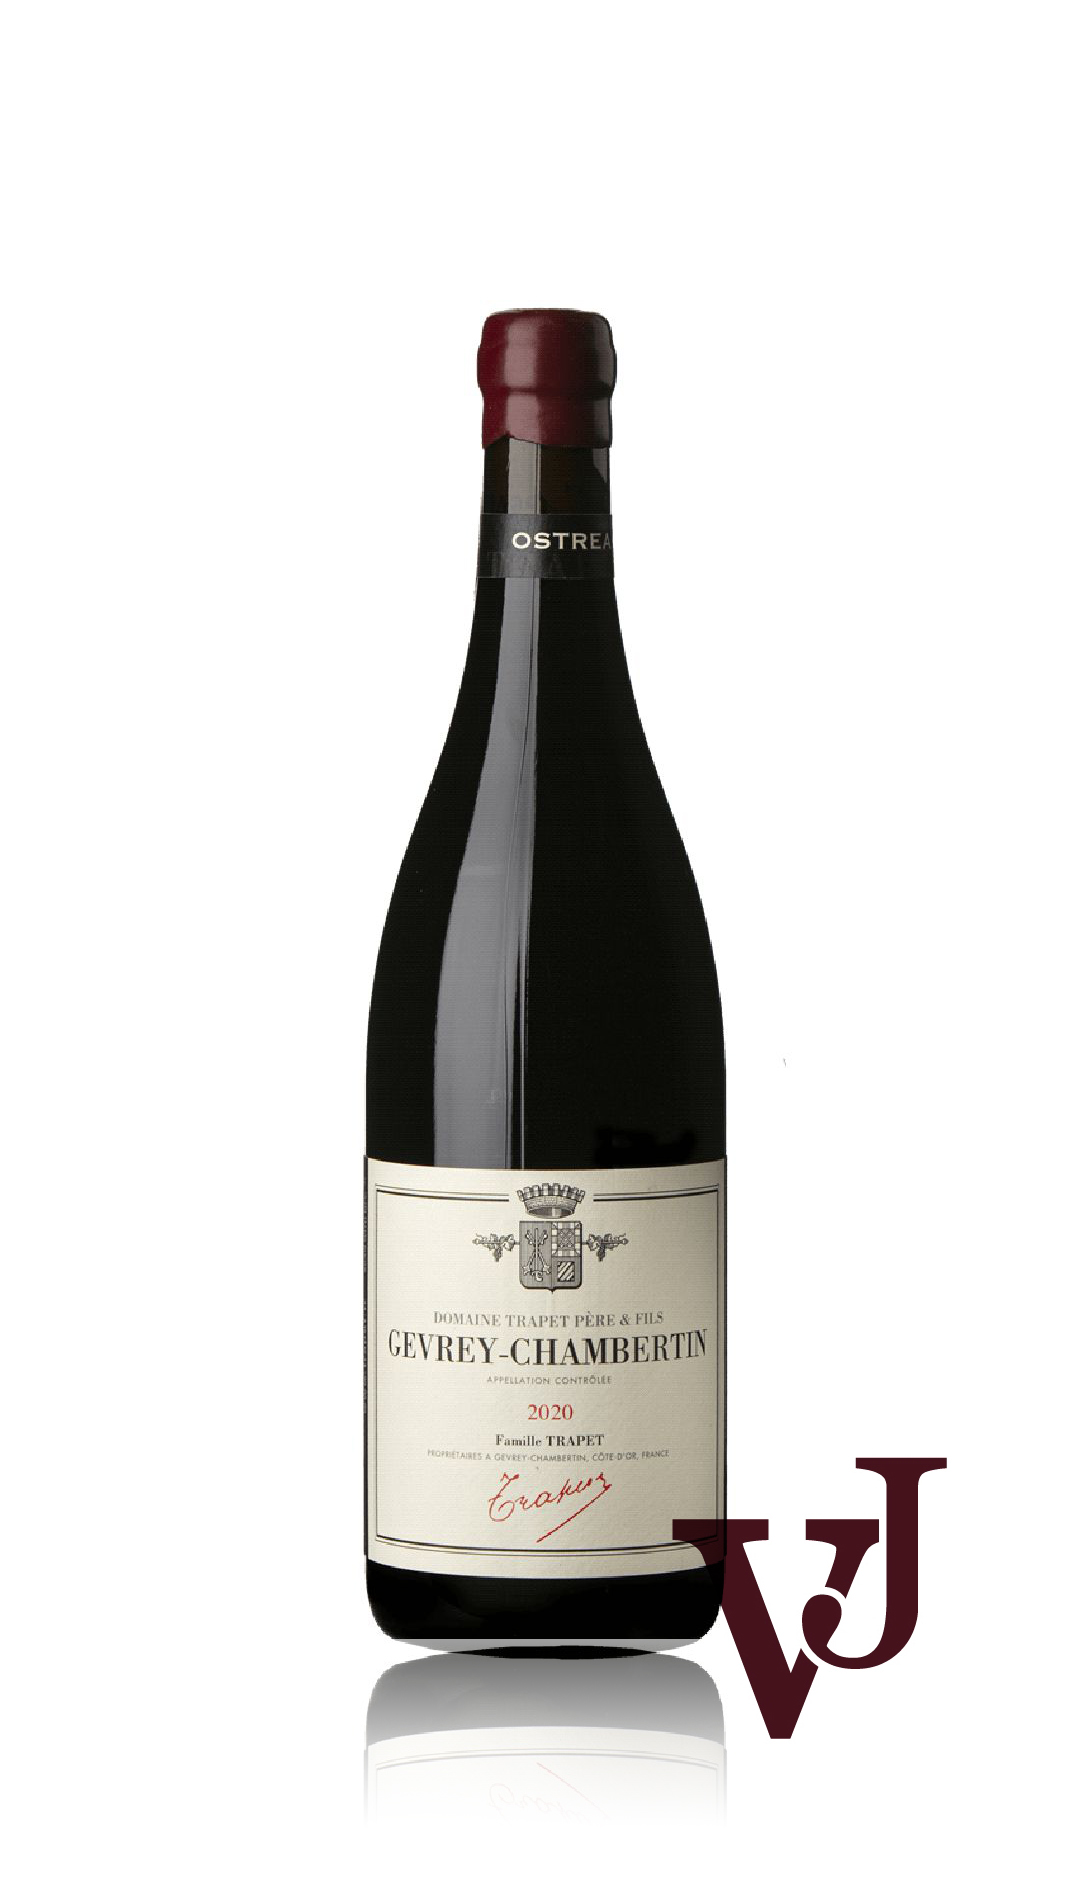 Rött Vin - Gevrey-Chambertin Ostrea Domaine Trapet 2020 artikel nummer 9217501 från producenten Domaine Trapet från området Frankrike